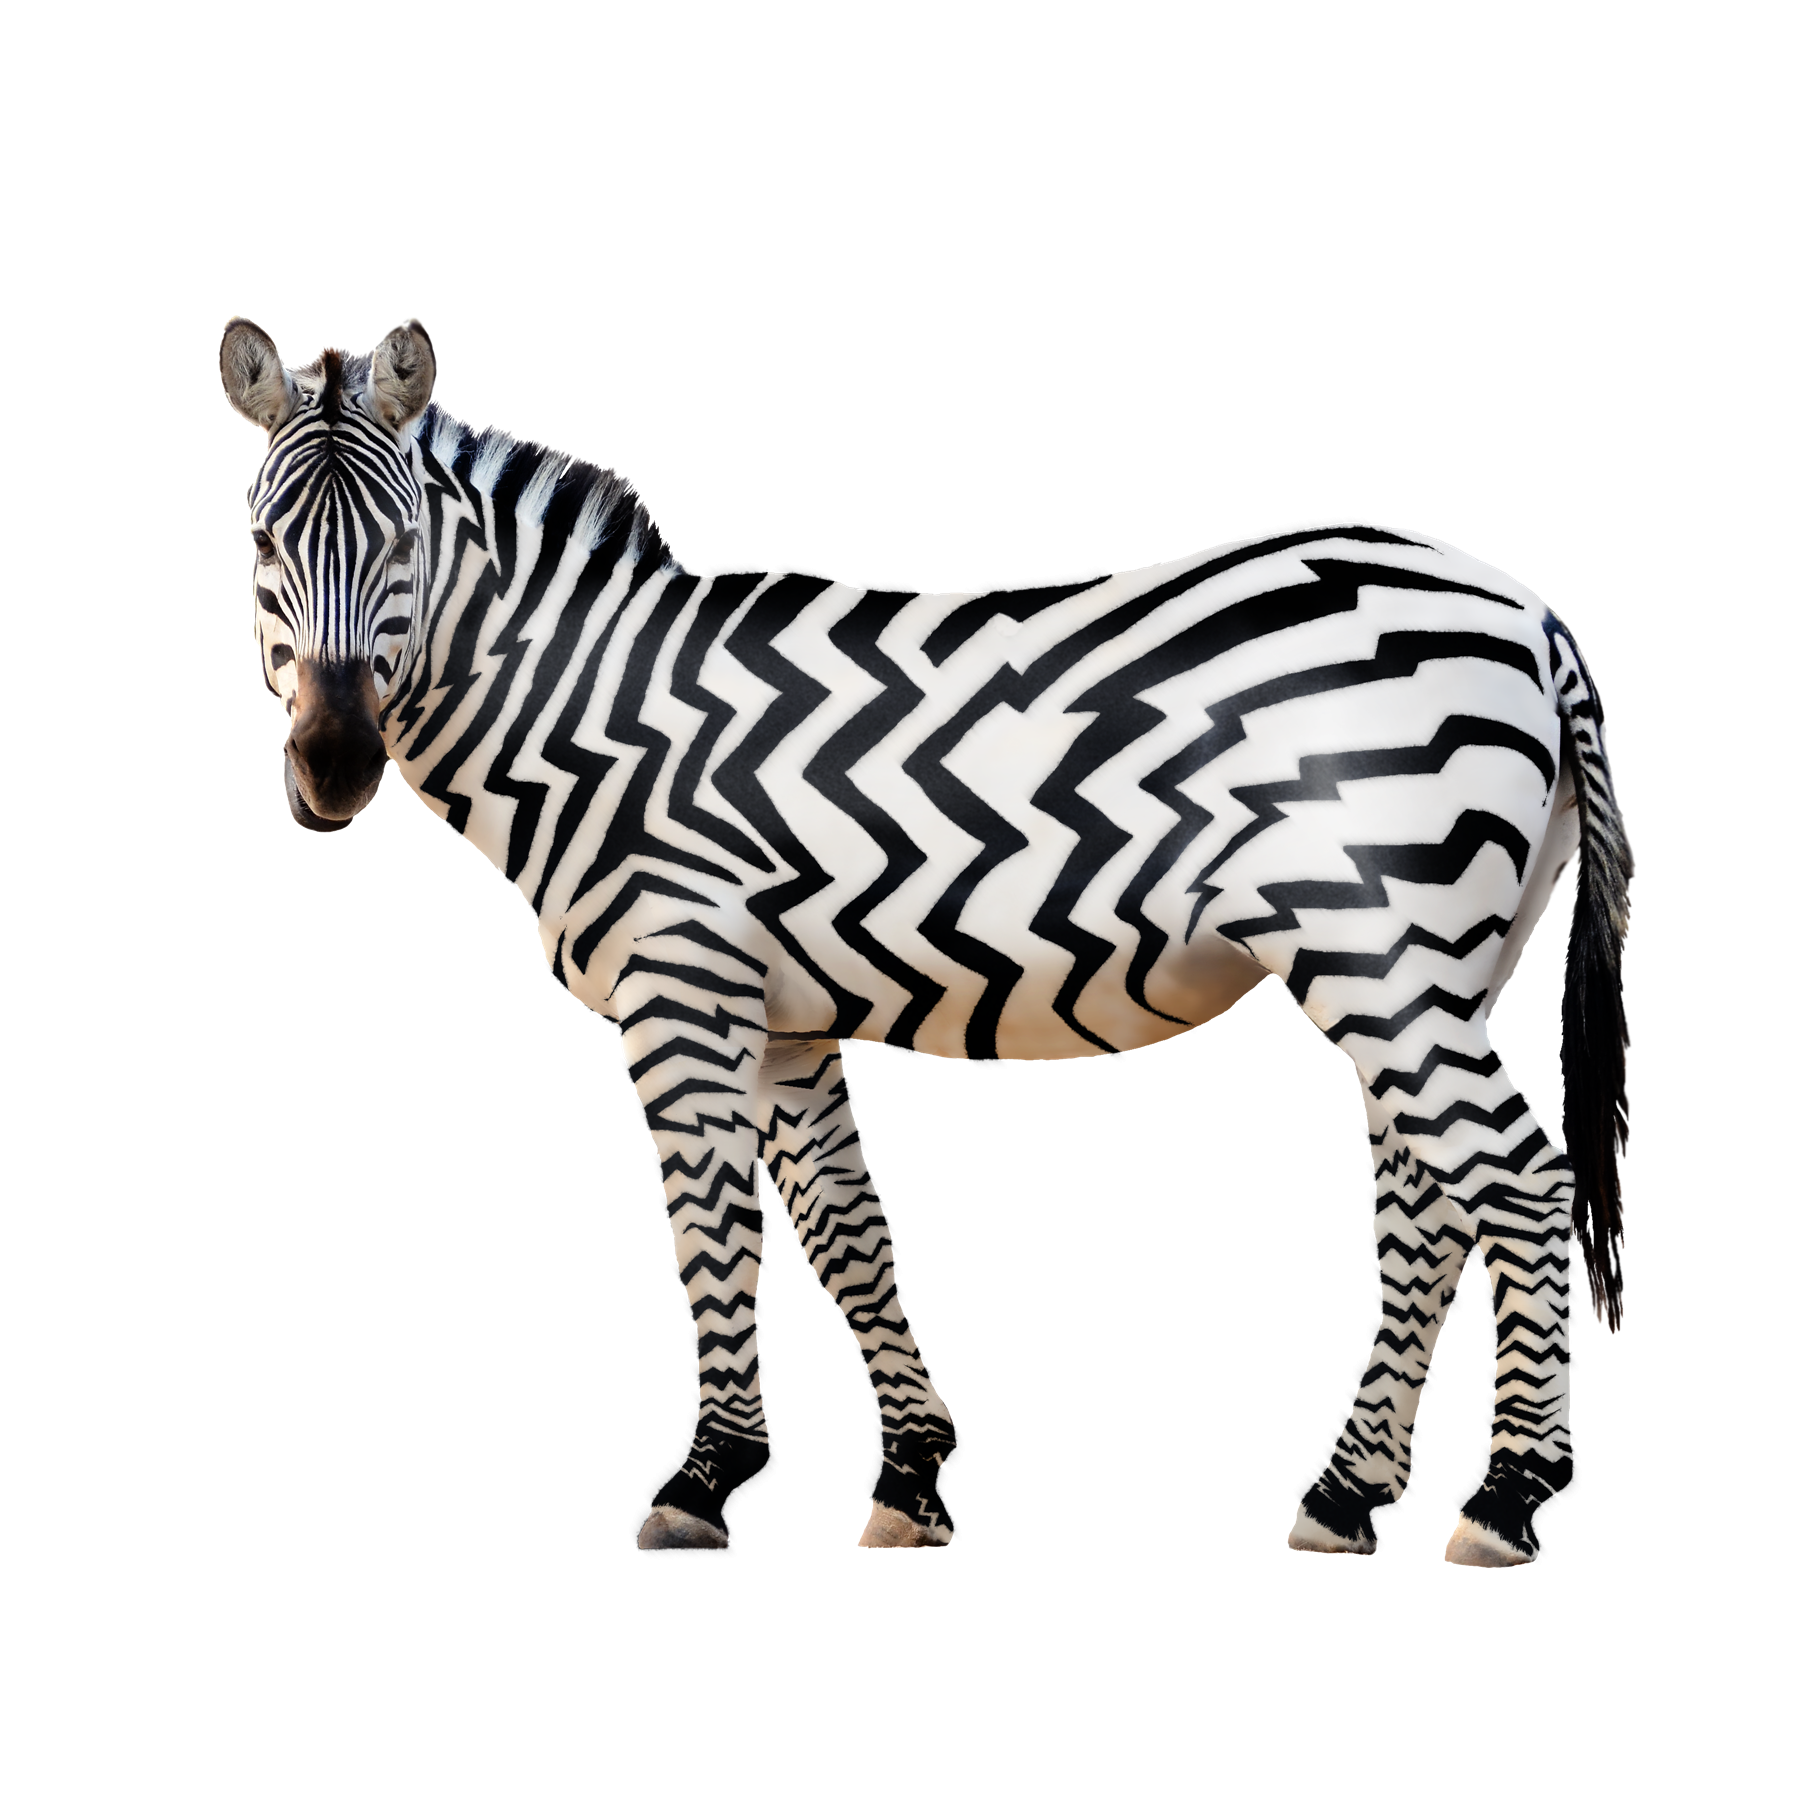 Zebra PNG HD and Transparent